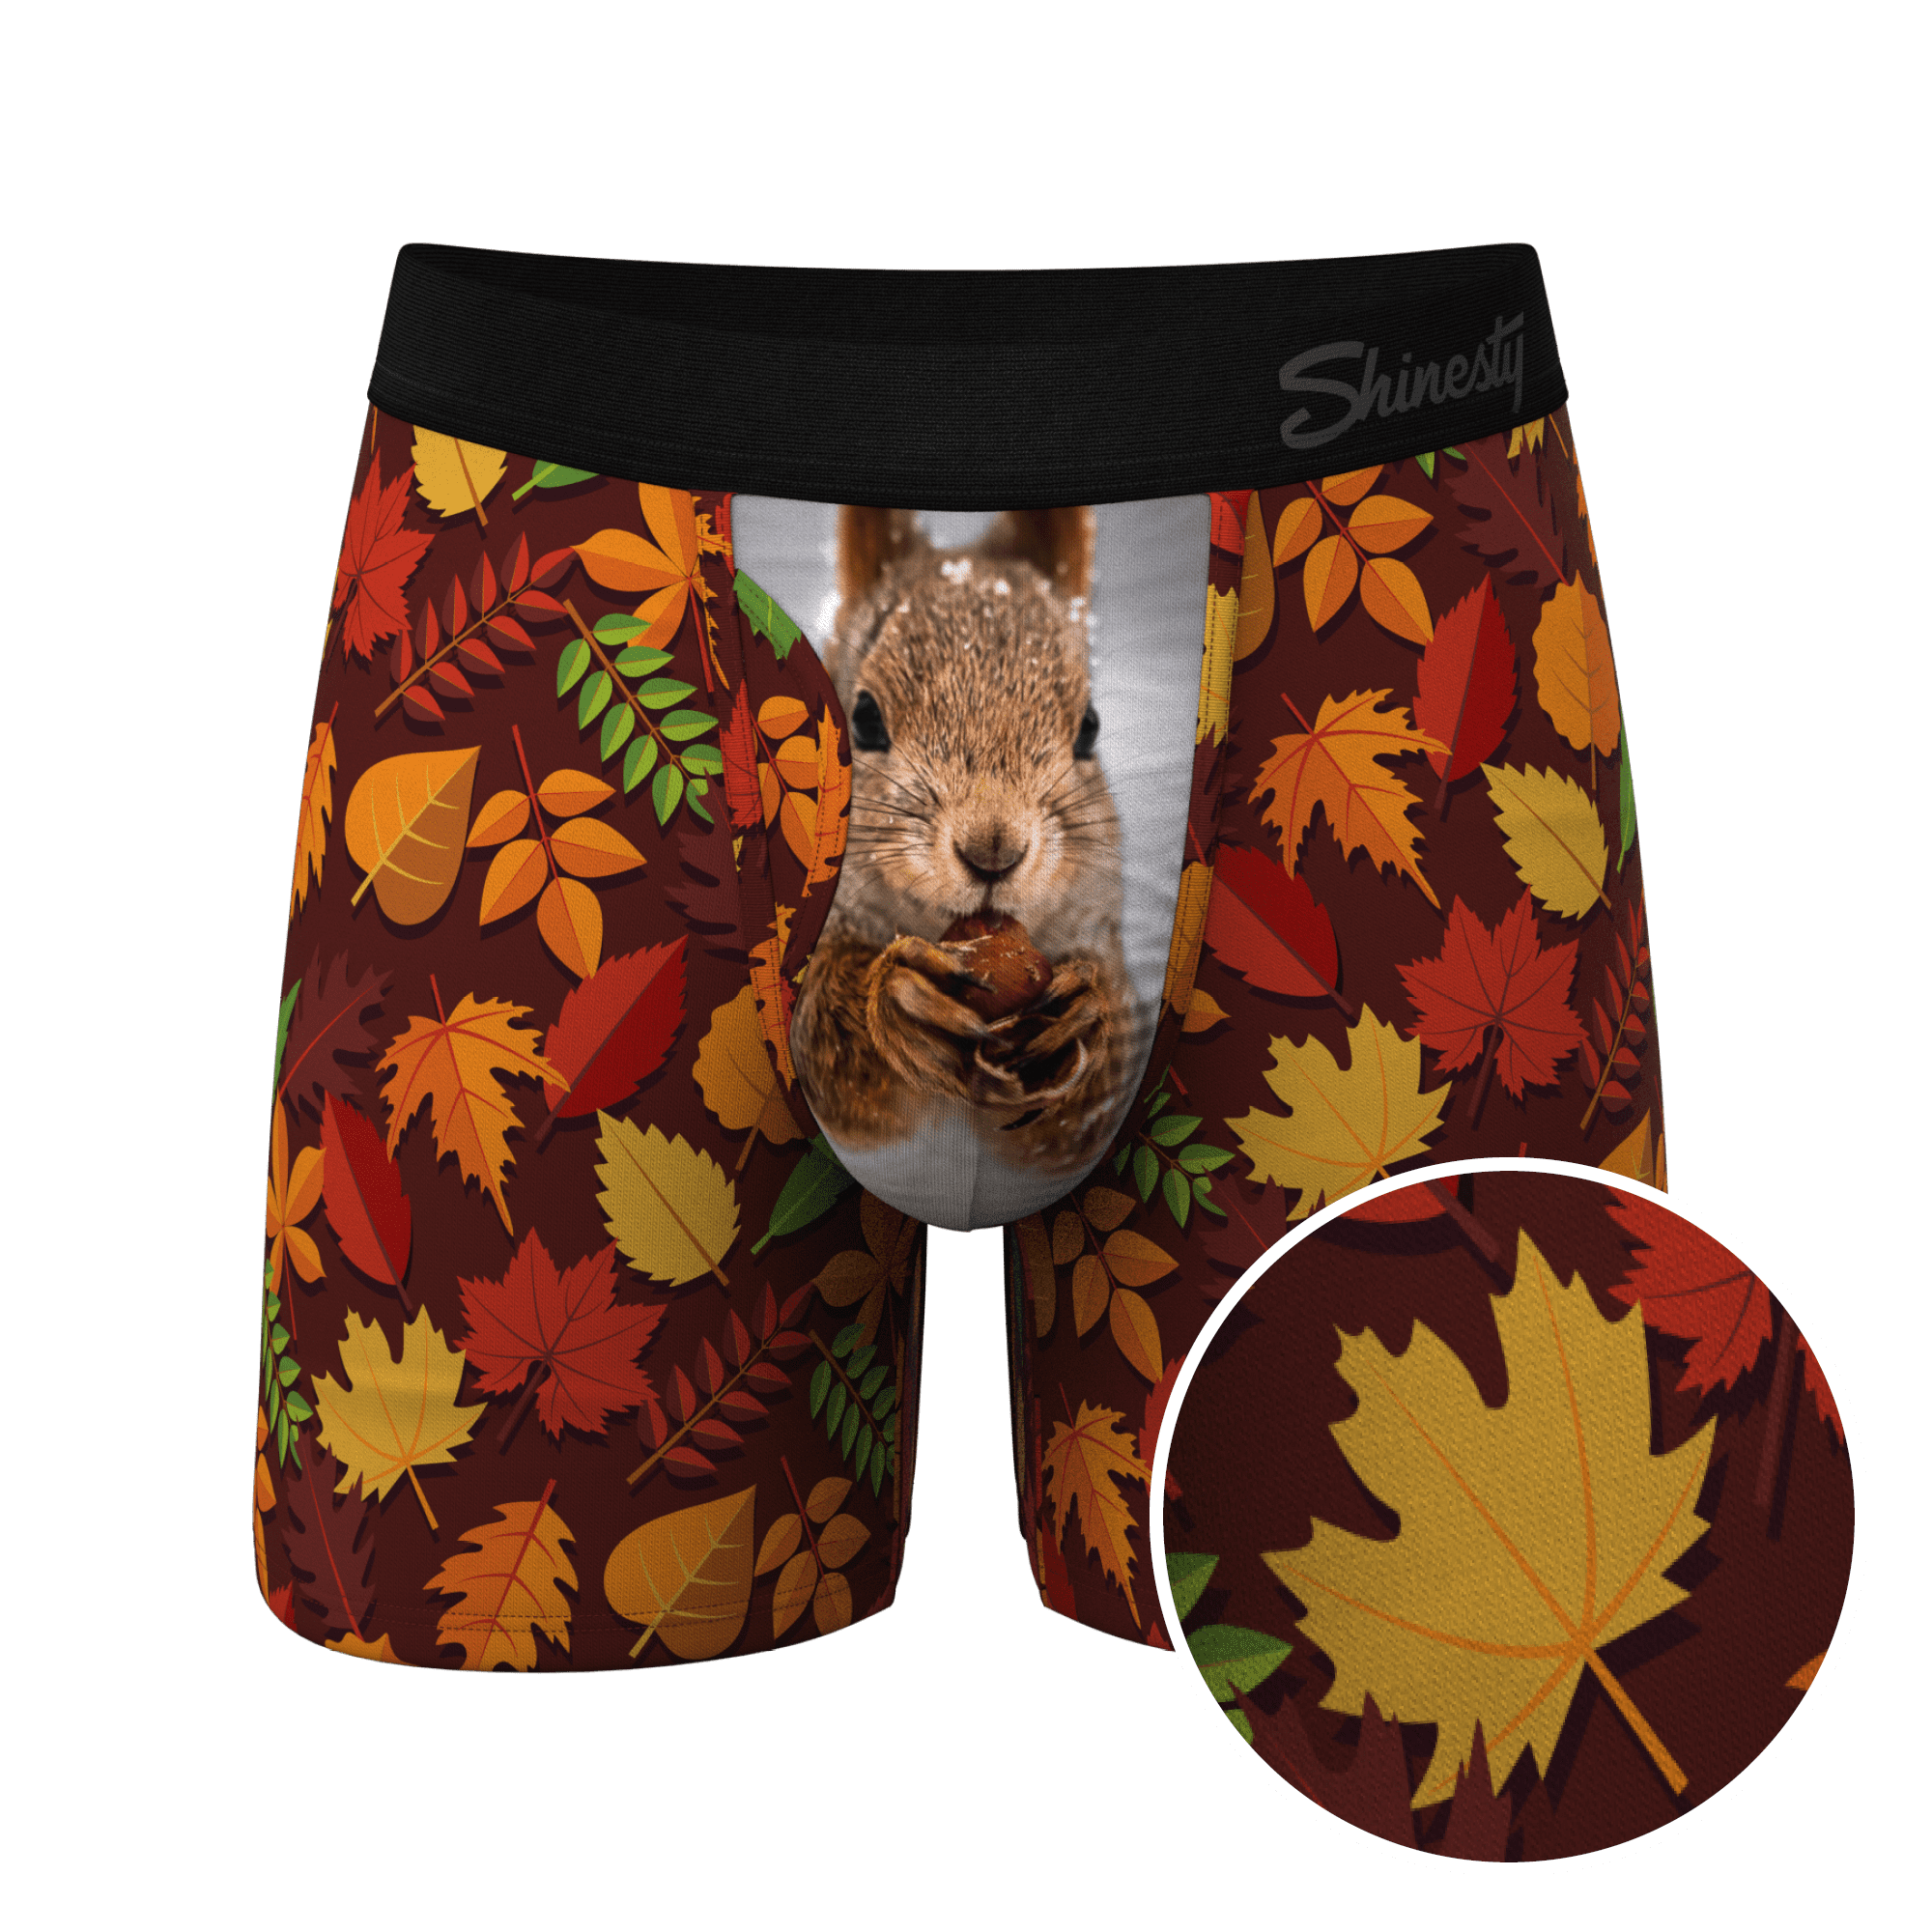 The Acorn Hoard - Shinesty Squirrel Ball Hammock Pouch Underwear With Fly  Medium 